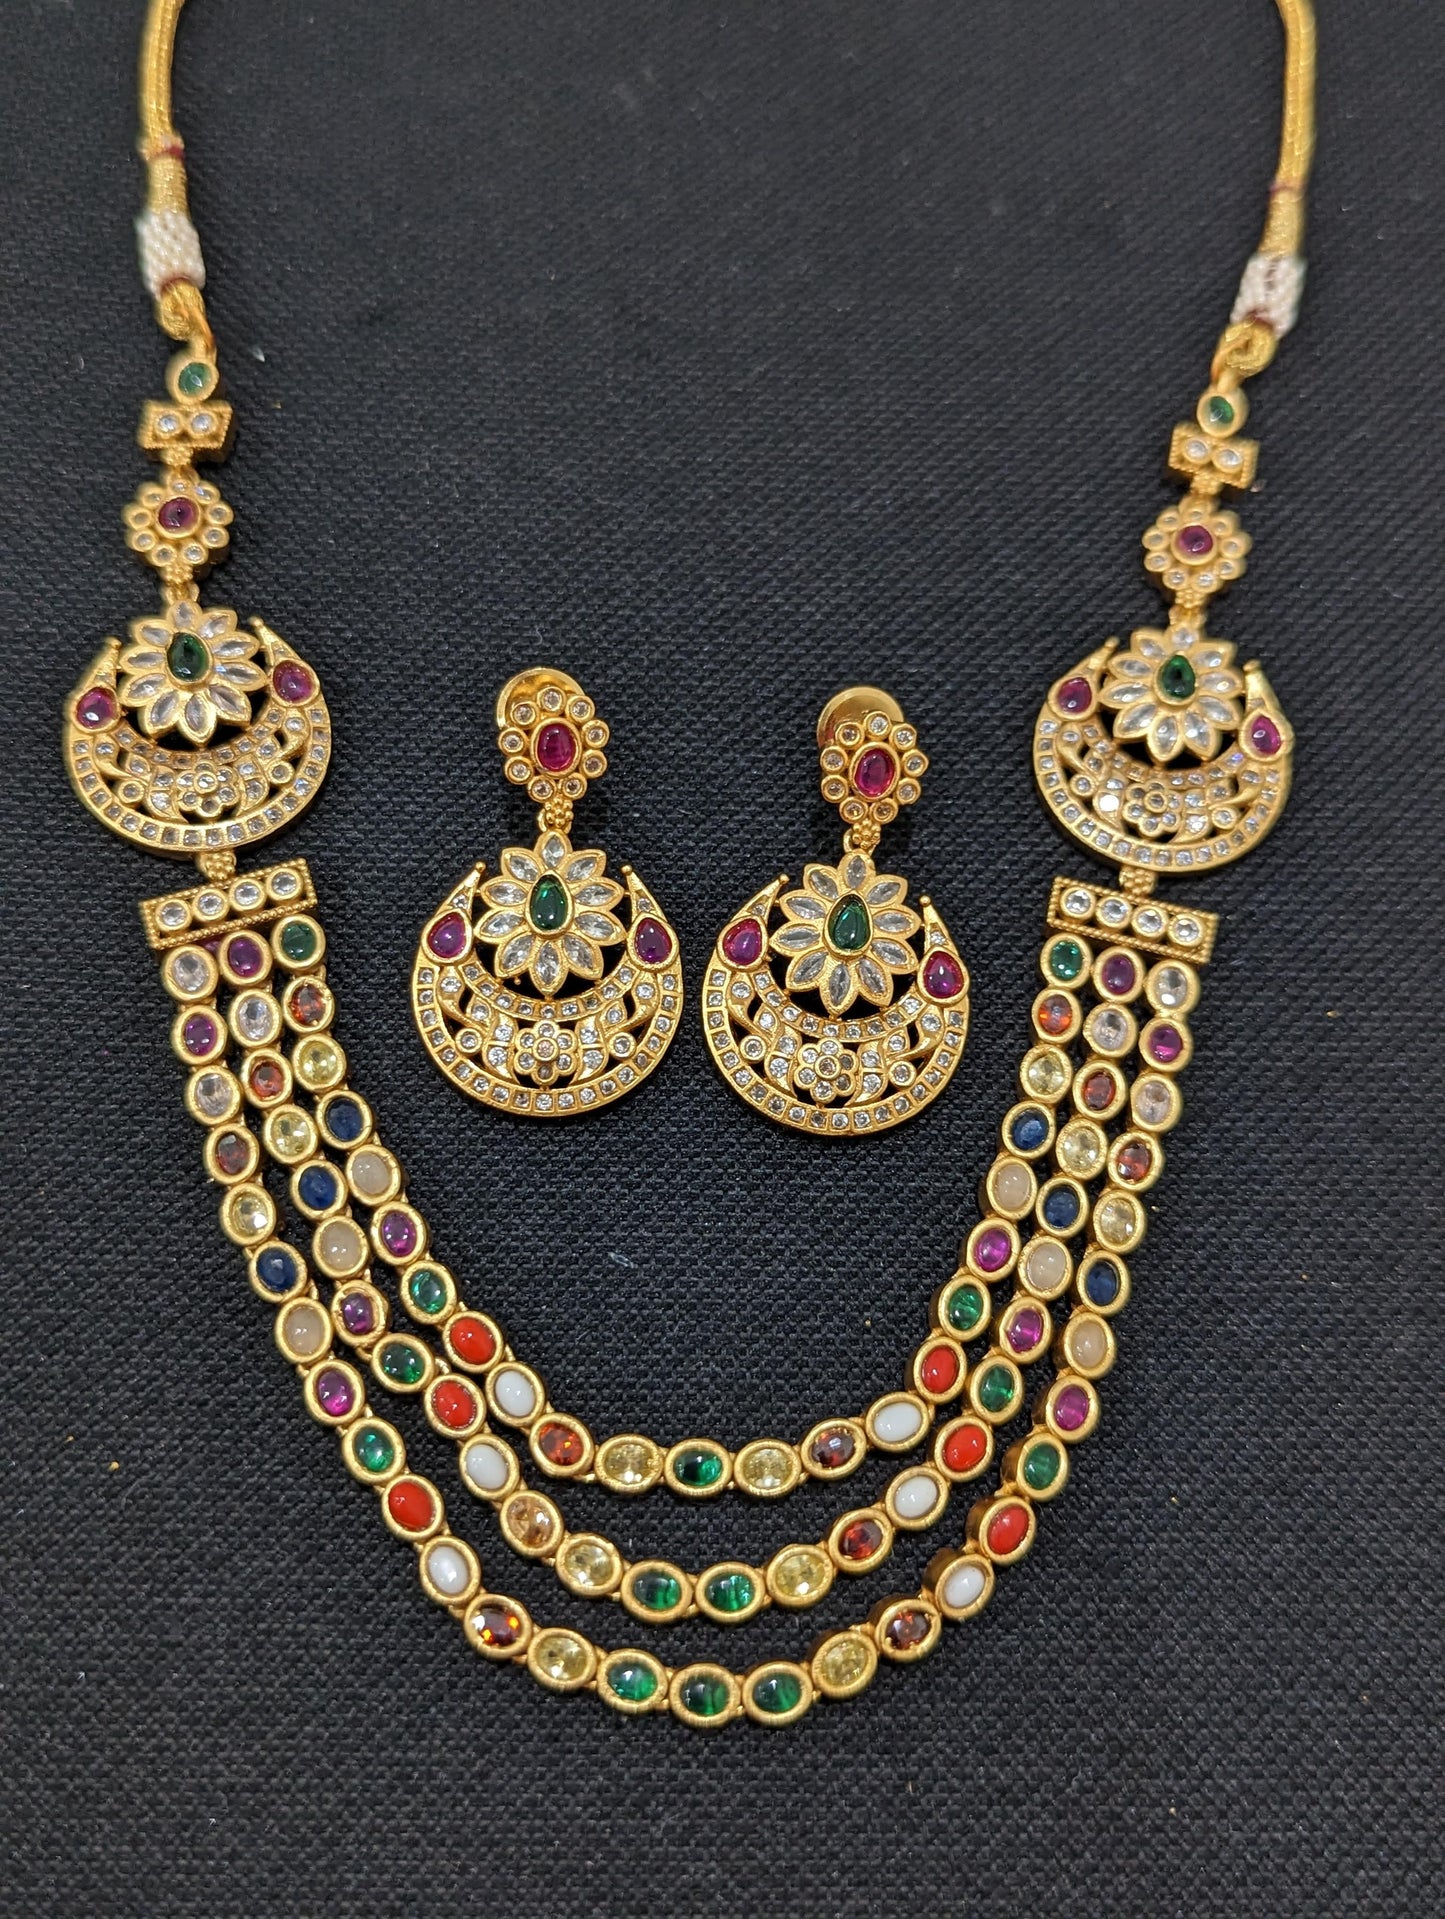 Triple strand Navratna stone Choker necklace and earrings set